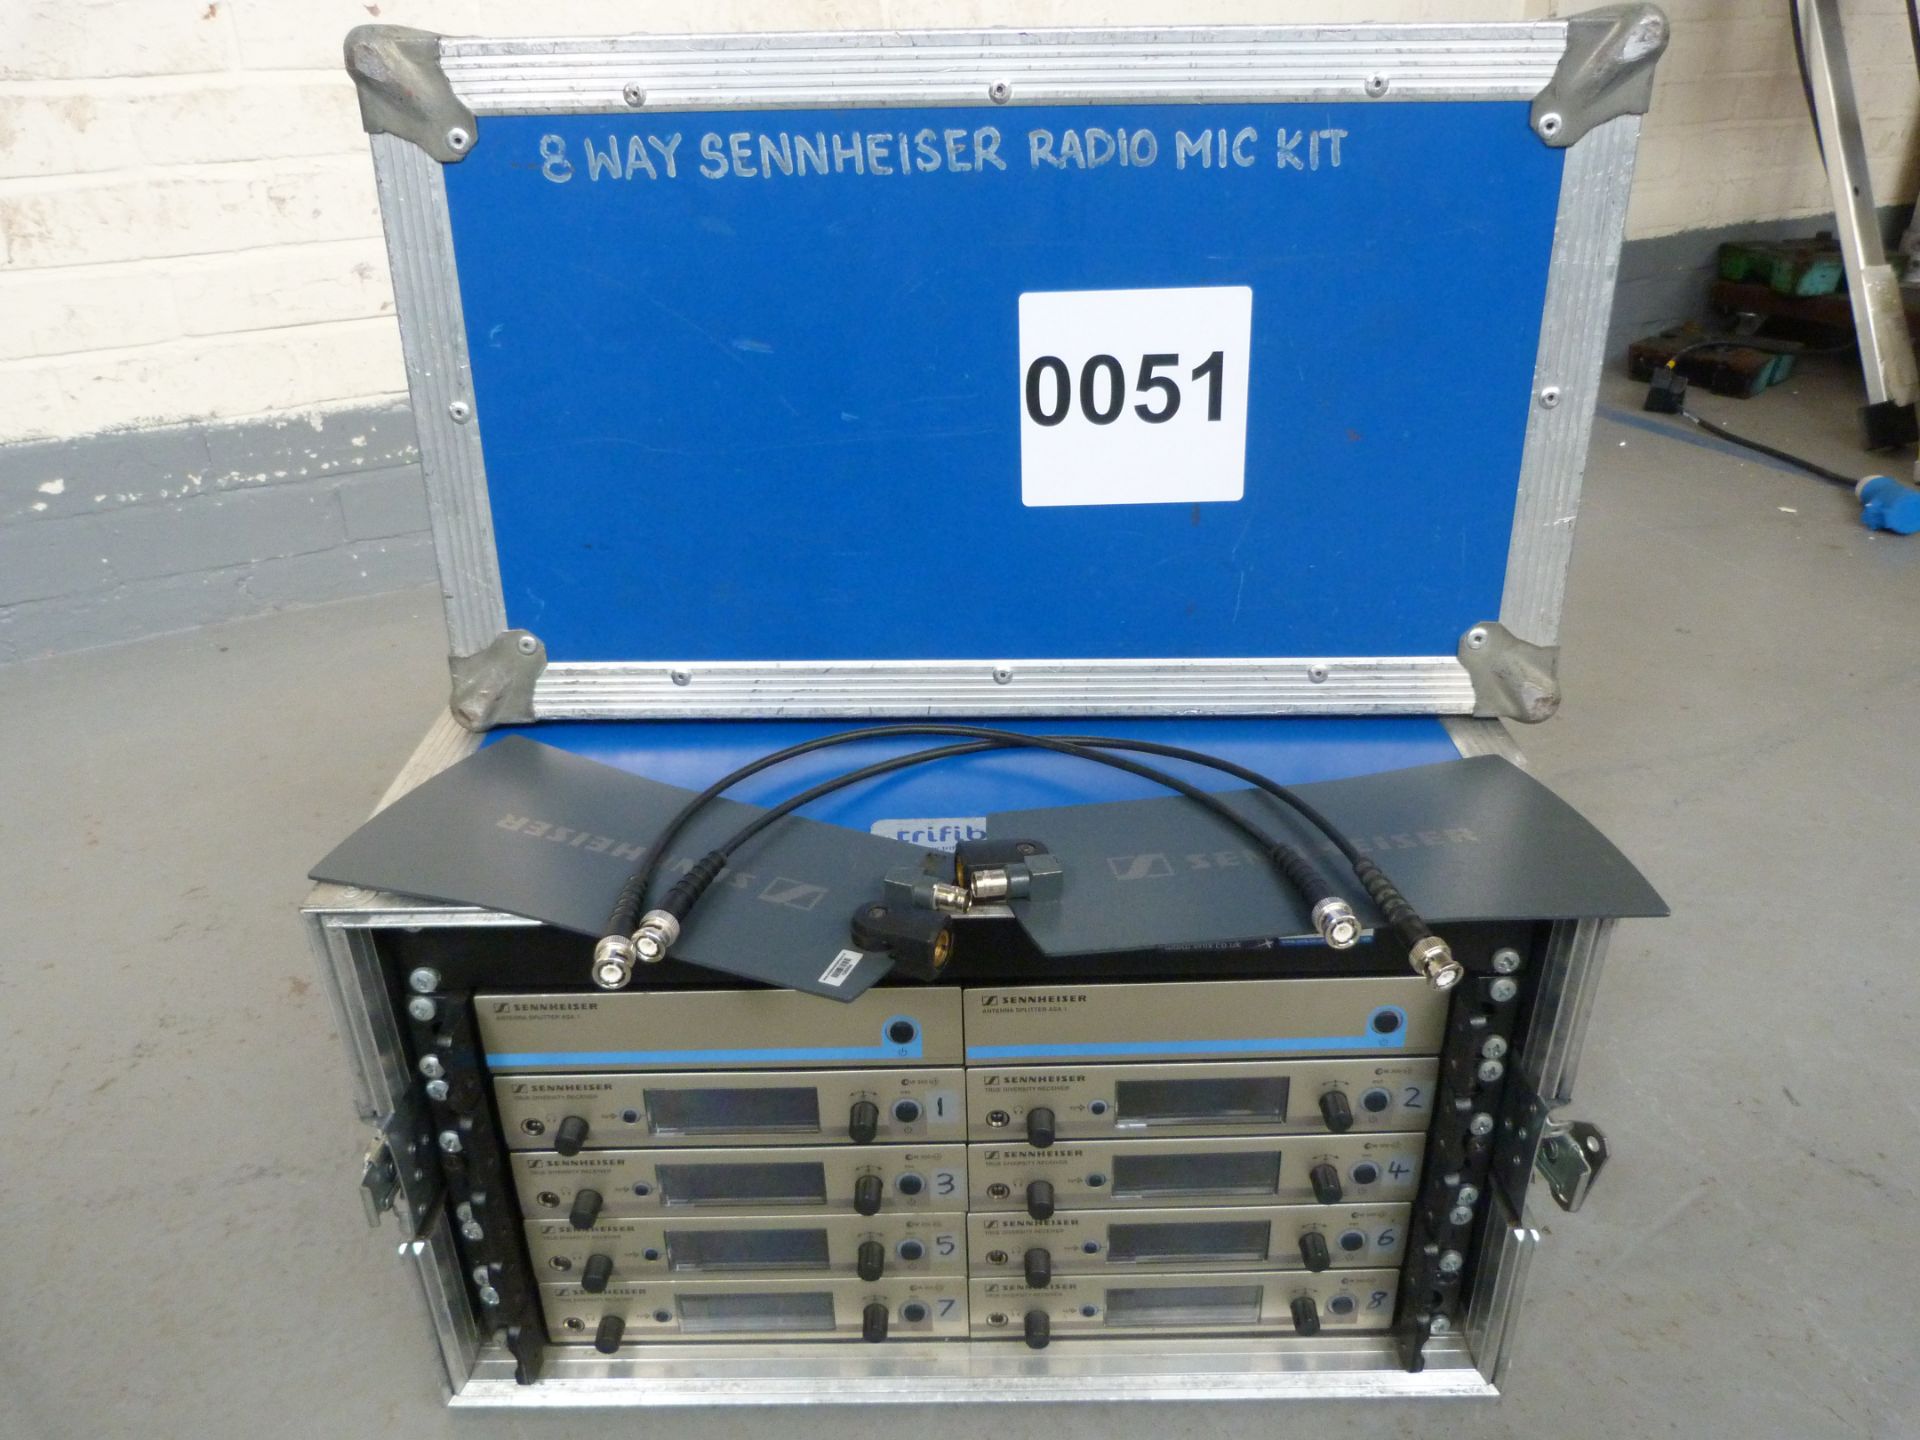 Sennheiser 8 way G3 ew300 Receiver Rack, EM300 G3 Rackmount Receiver, 4x SK300 G3 Body Pack - Image 3 of 8